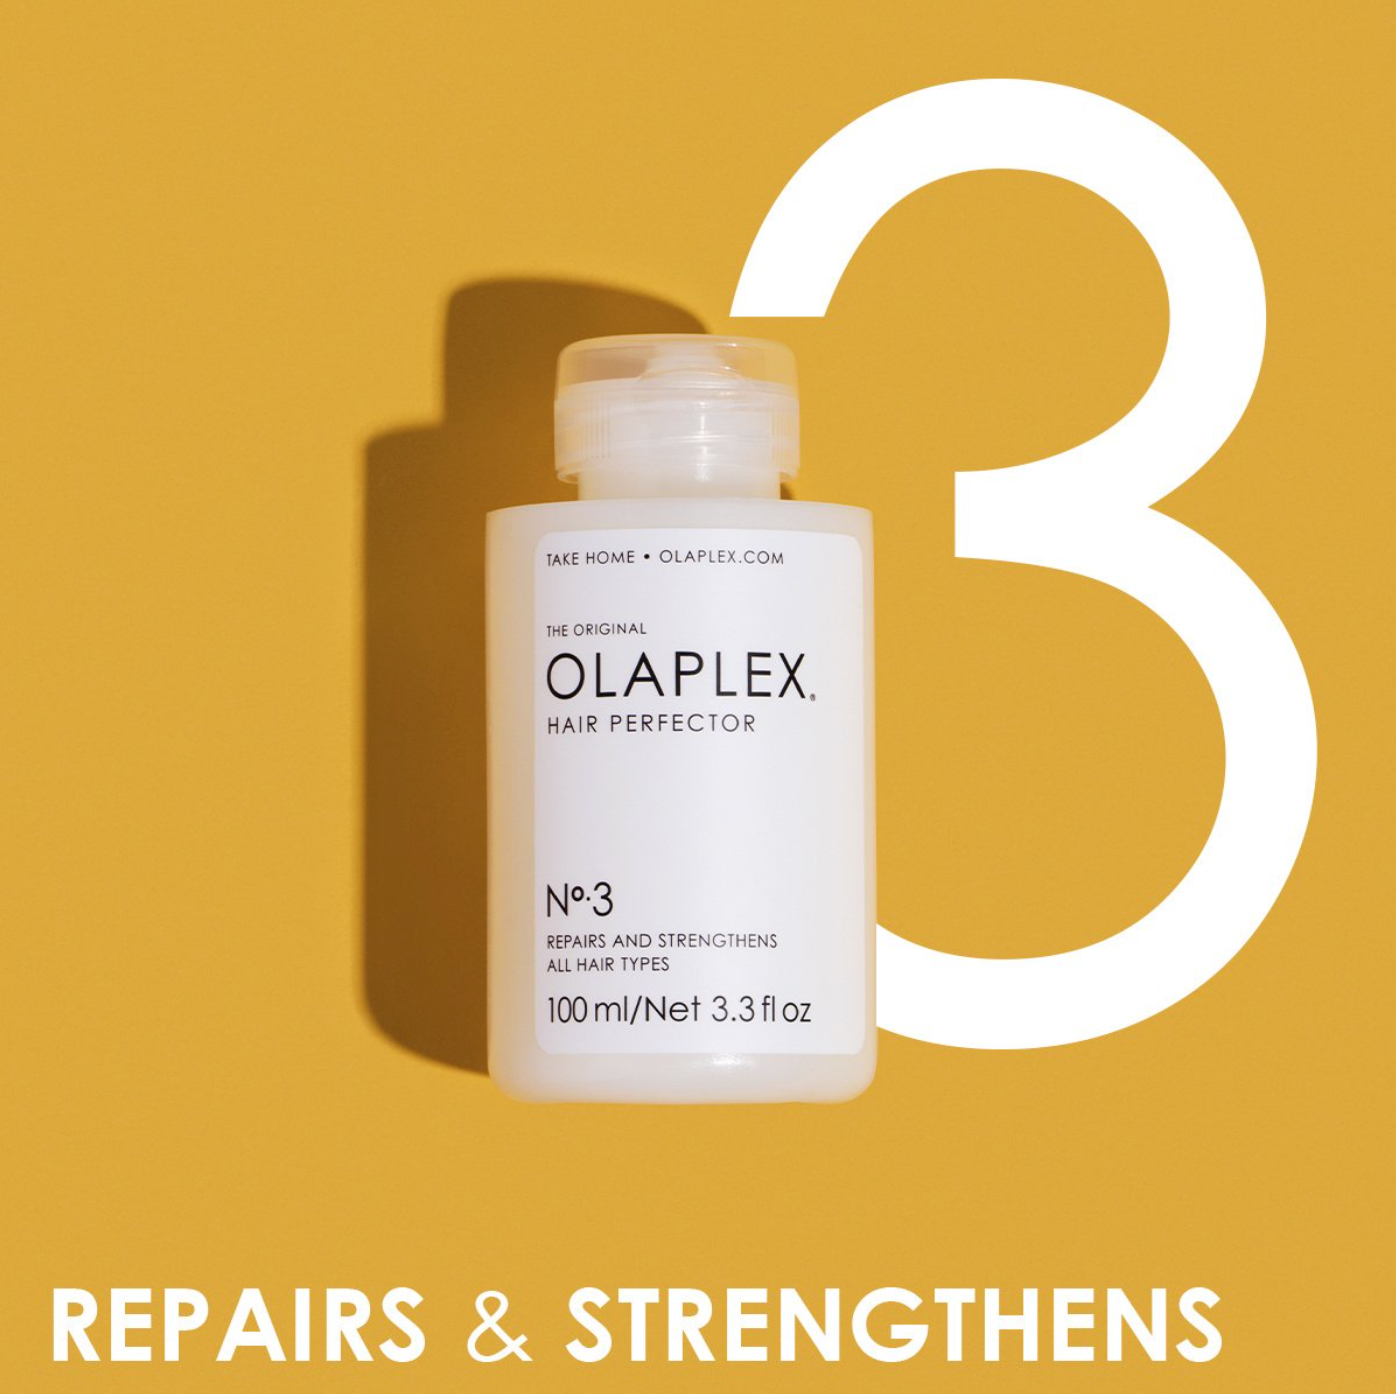 OLAPLEX No.3 Hair Perfector repairs & strengthens 